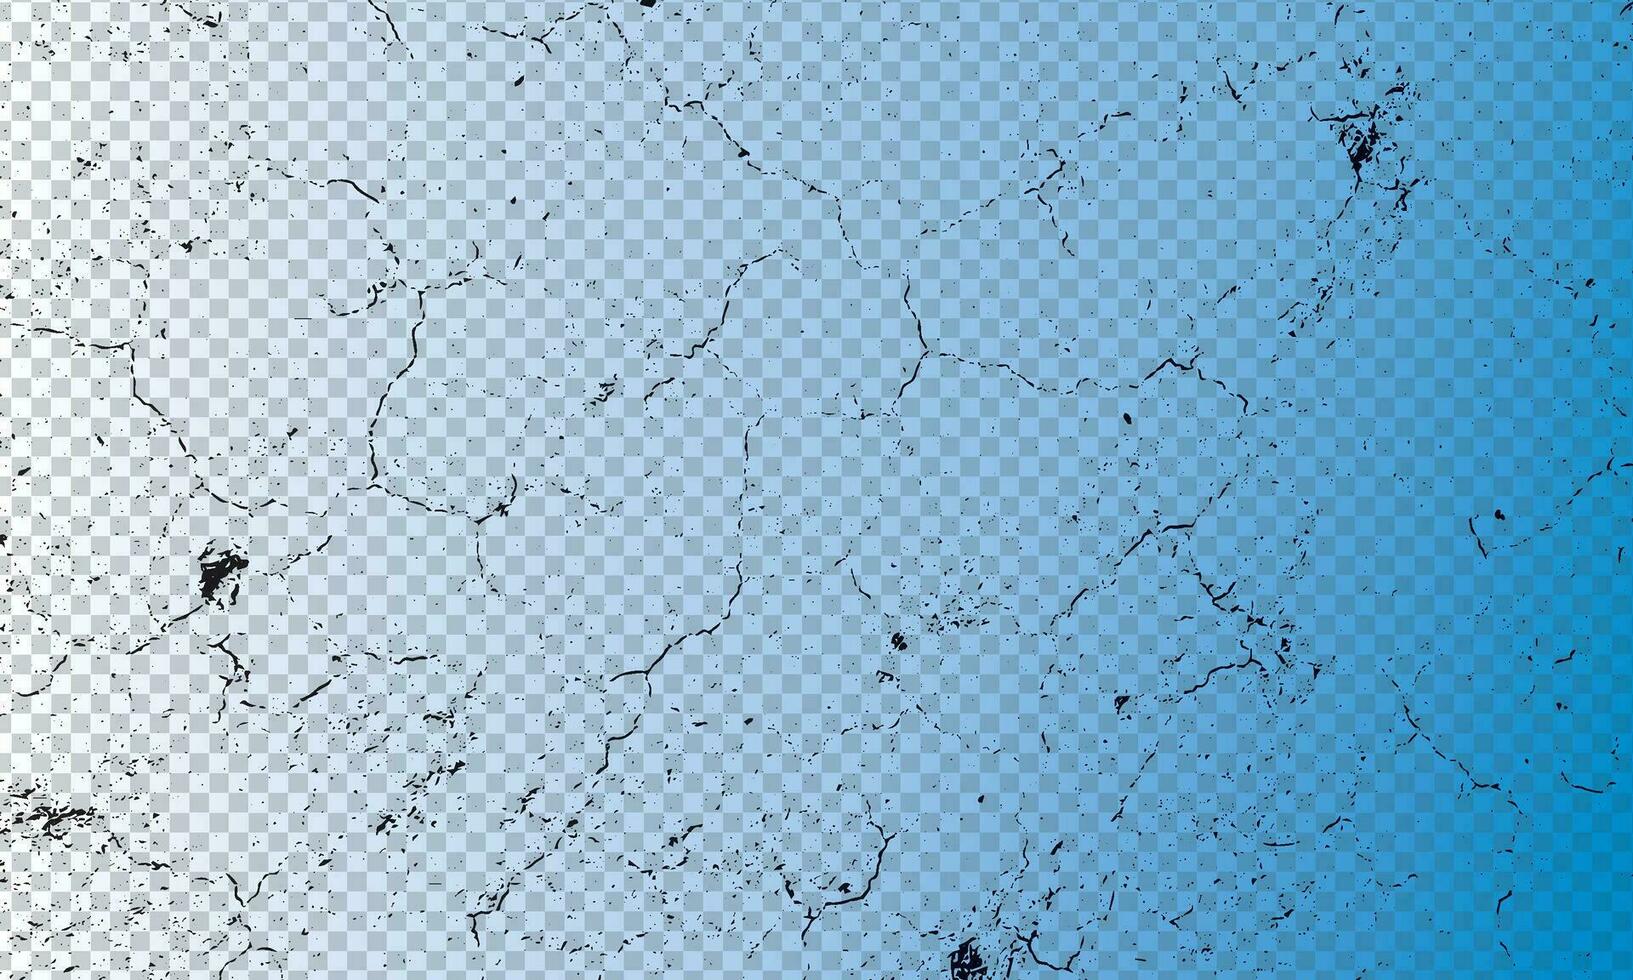 grunge effect on gradient color white stroke crack effect on blue background damage texture water splash, effect, splashing, grunge background, vector